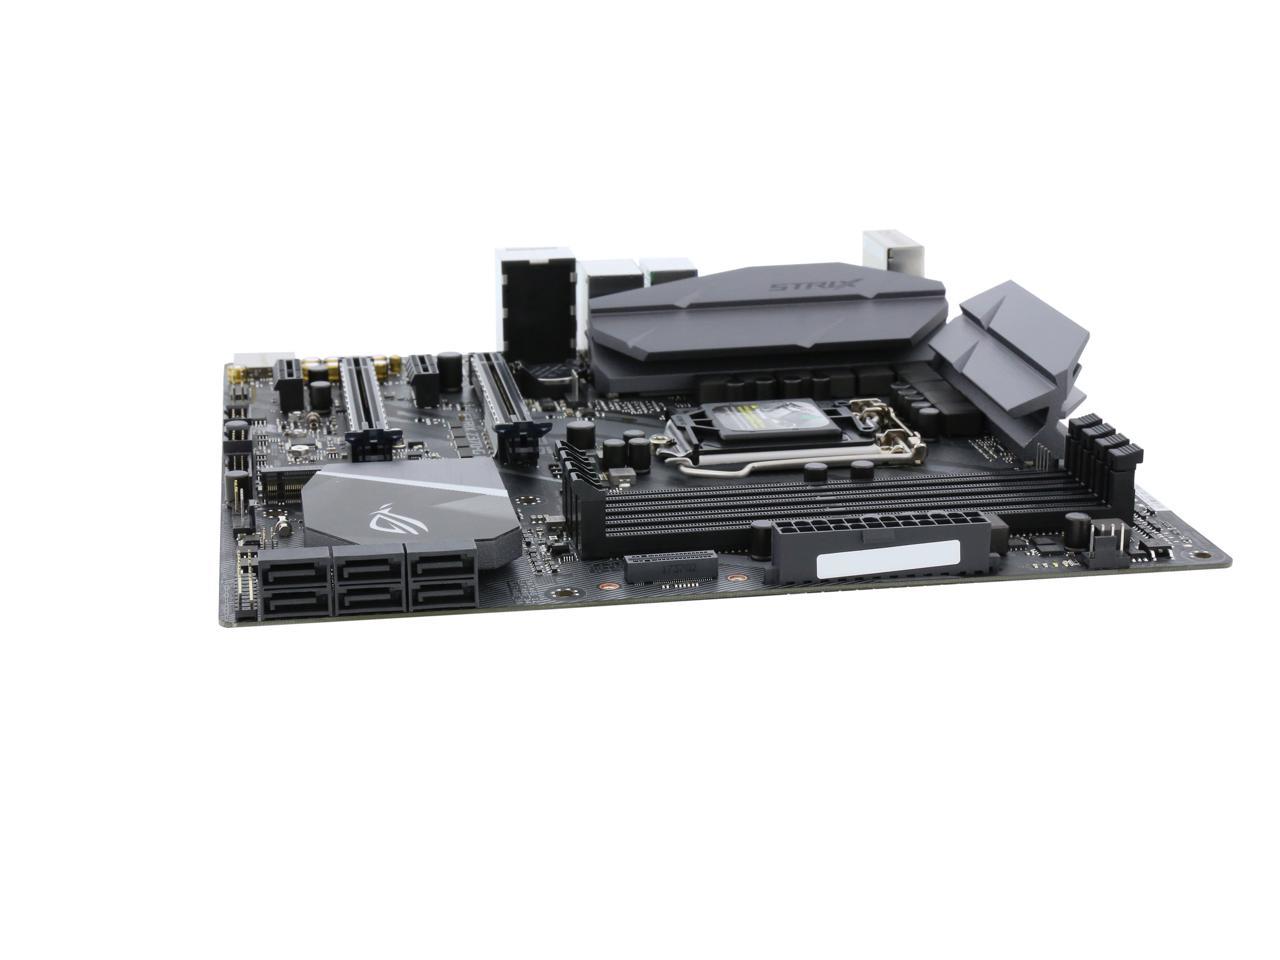 Asus Rog Strix Z370 G Gaming Wi Fi Ac Lga 1151 300 Series Micro Atx Intel Motherboard Newegg Com